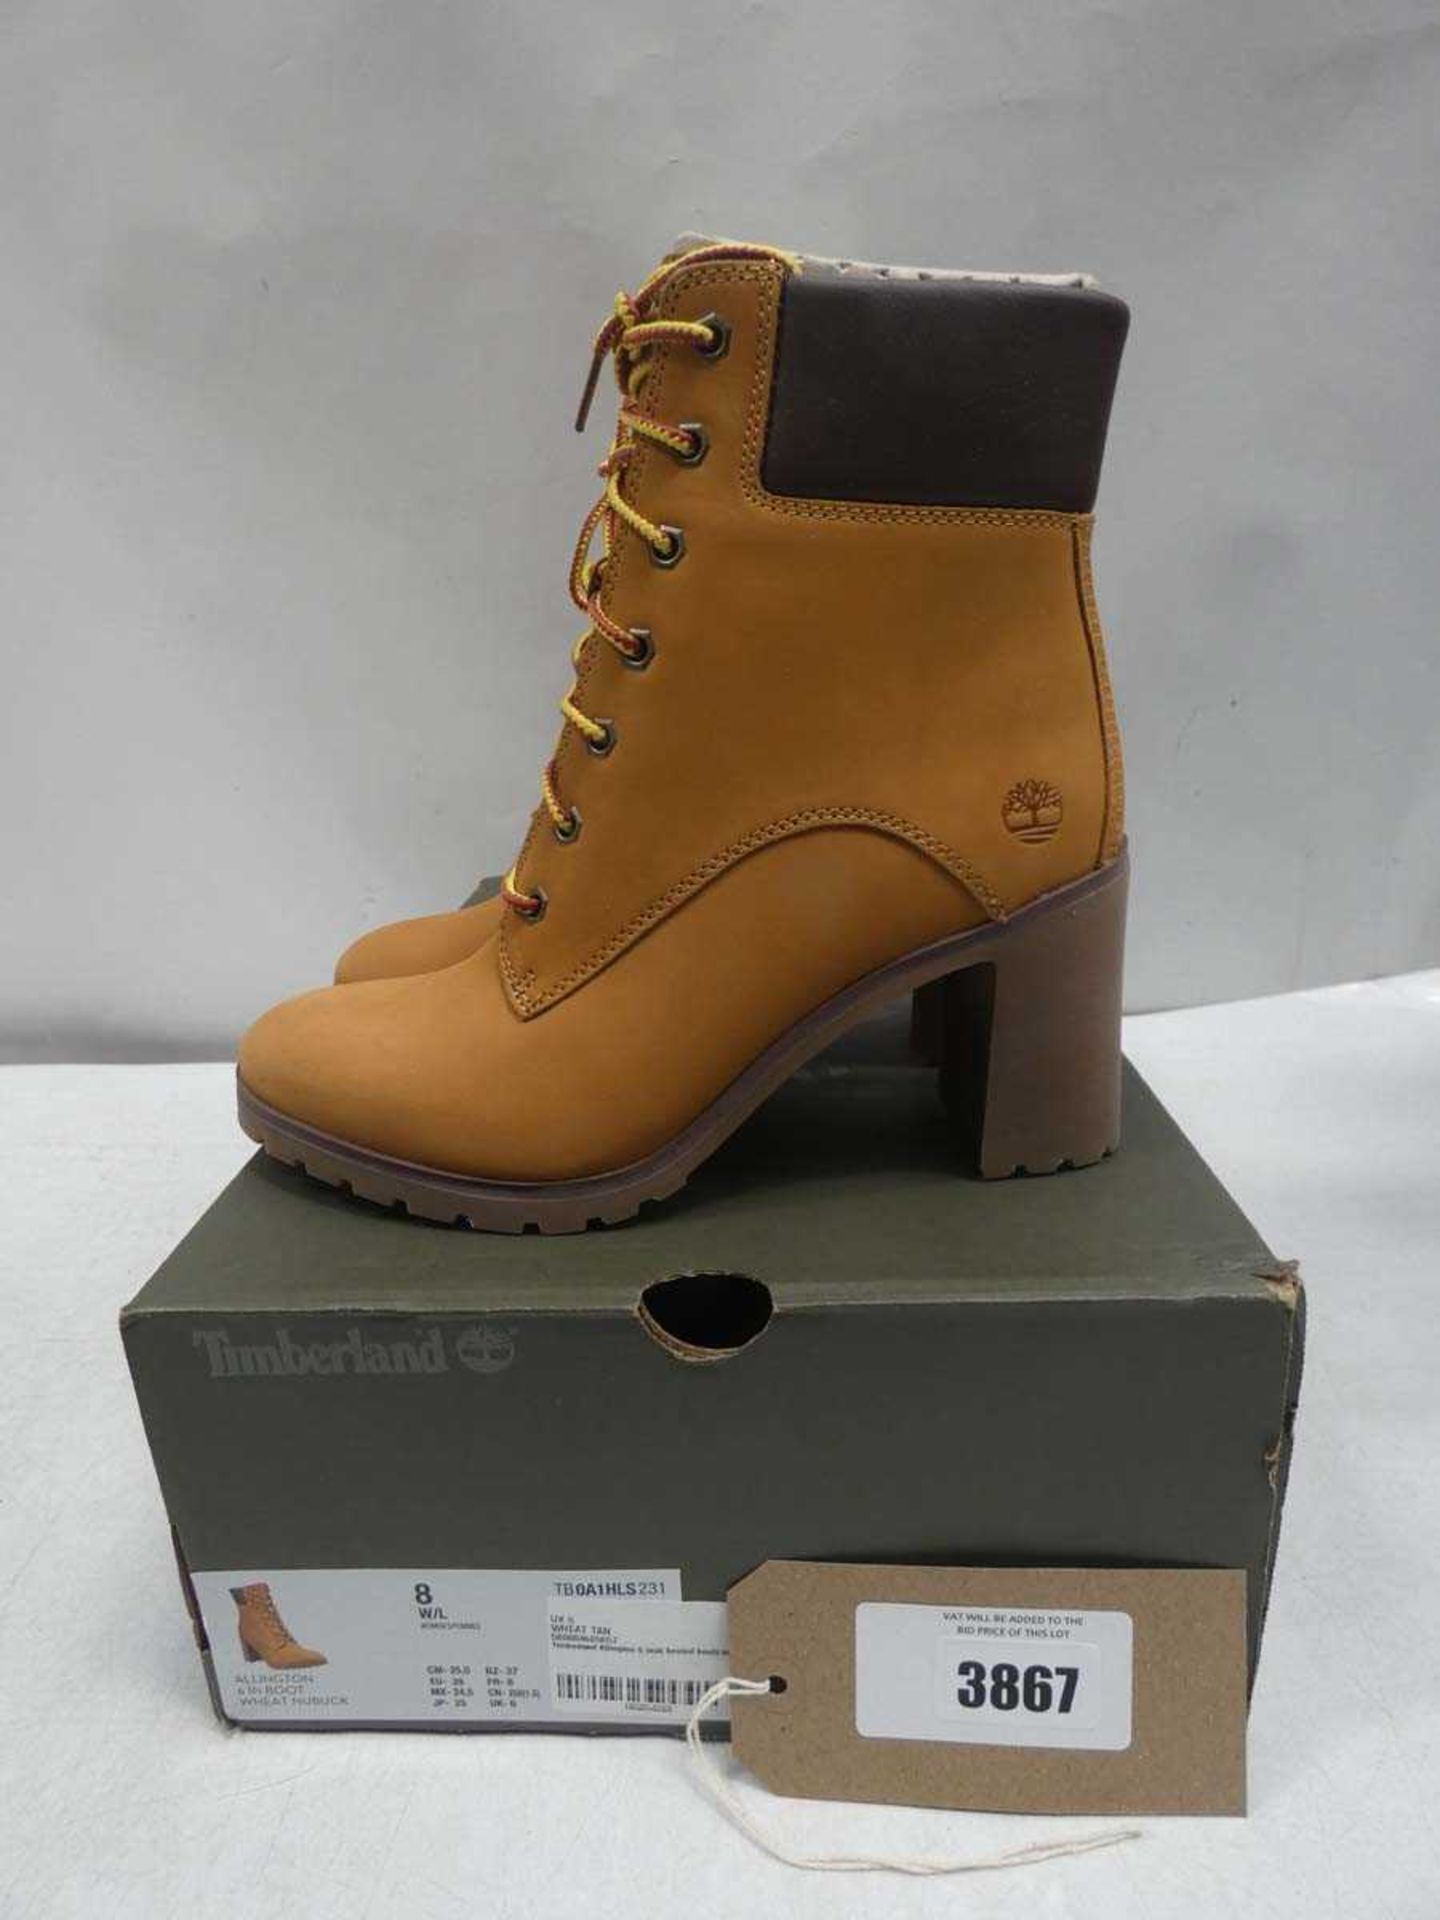 +VAT Timberland Allington heeled boots size 6